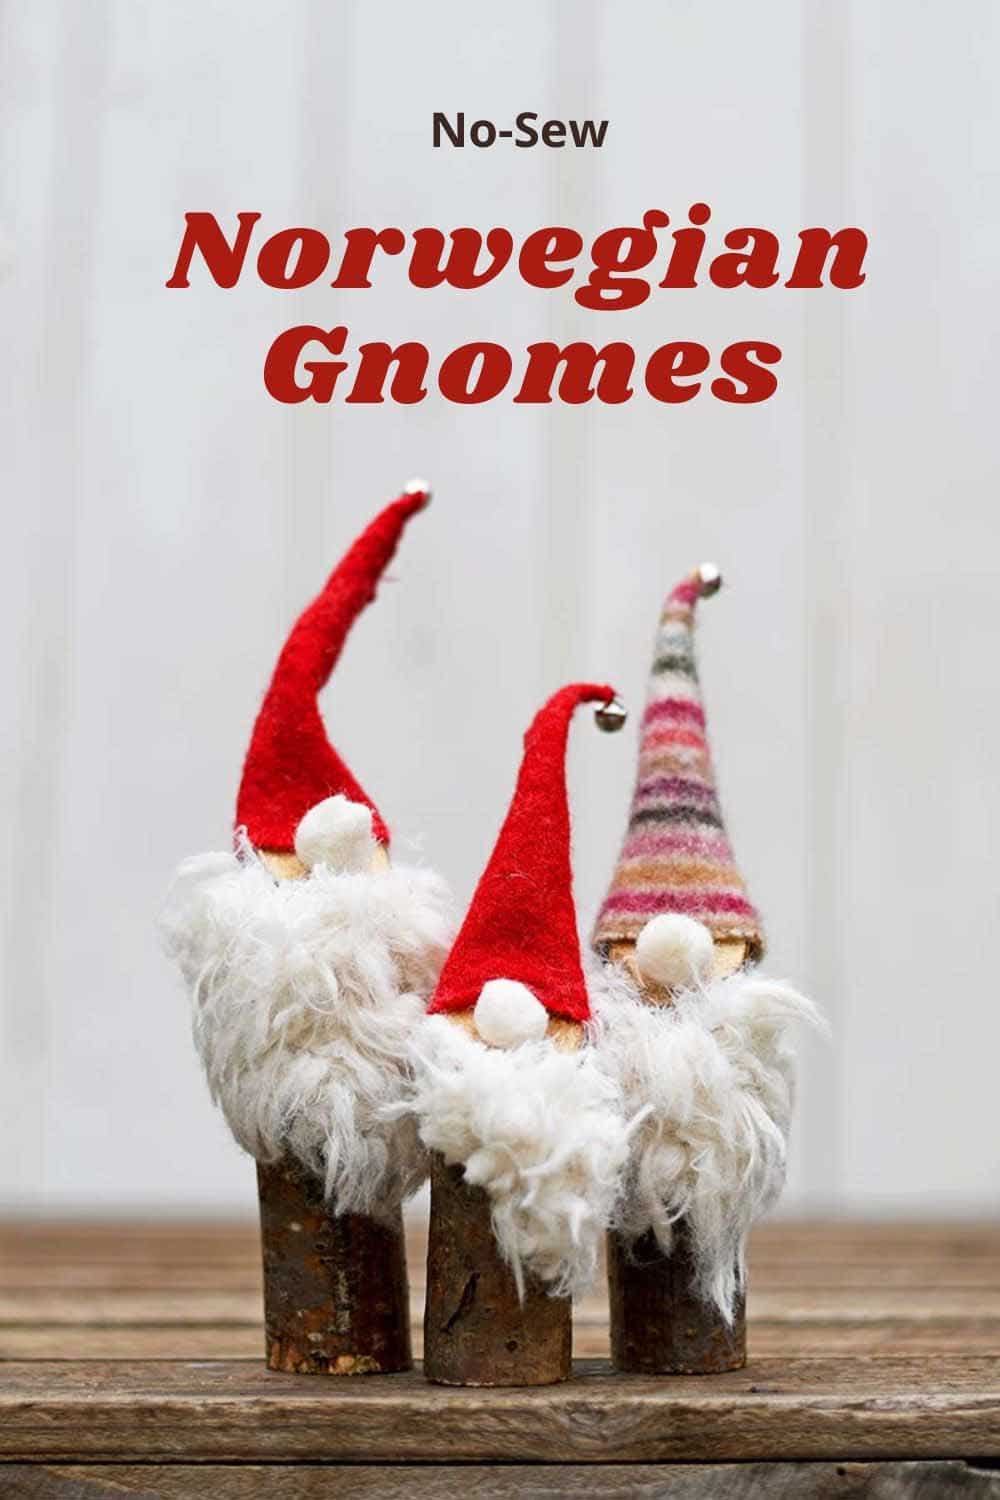 No-sew Norwegian gnomes